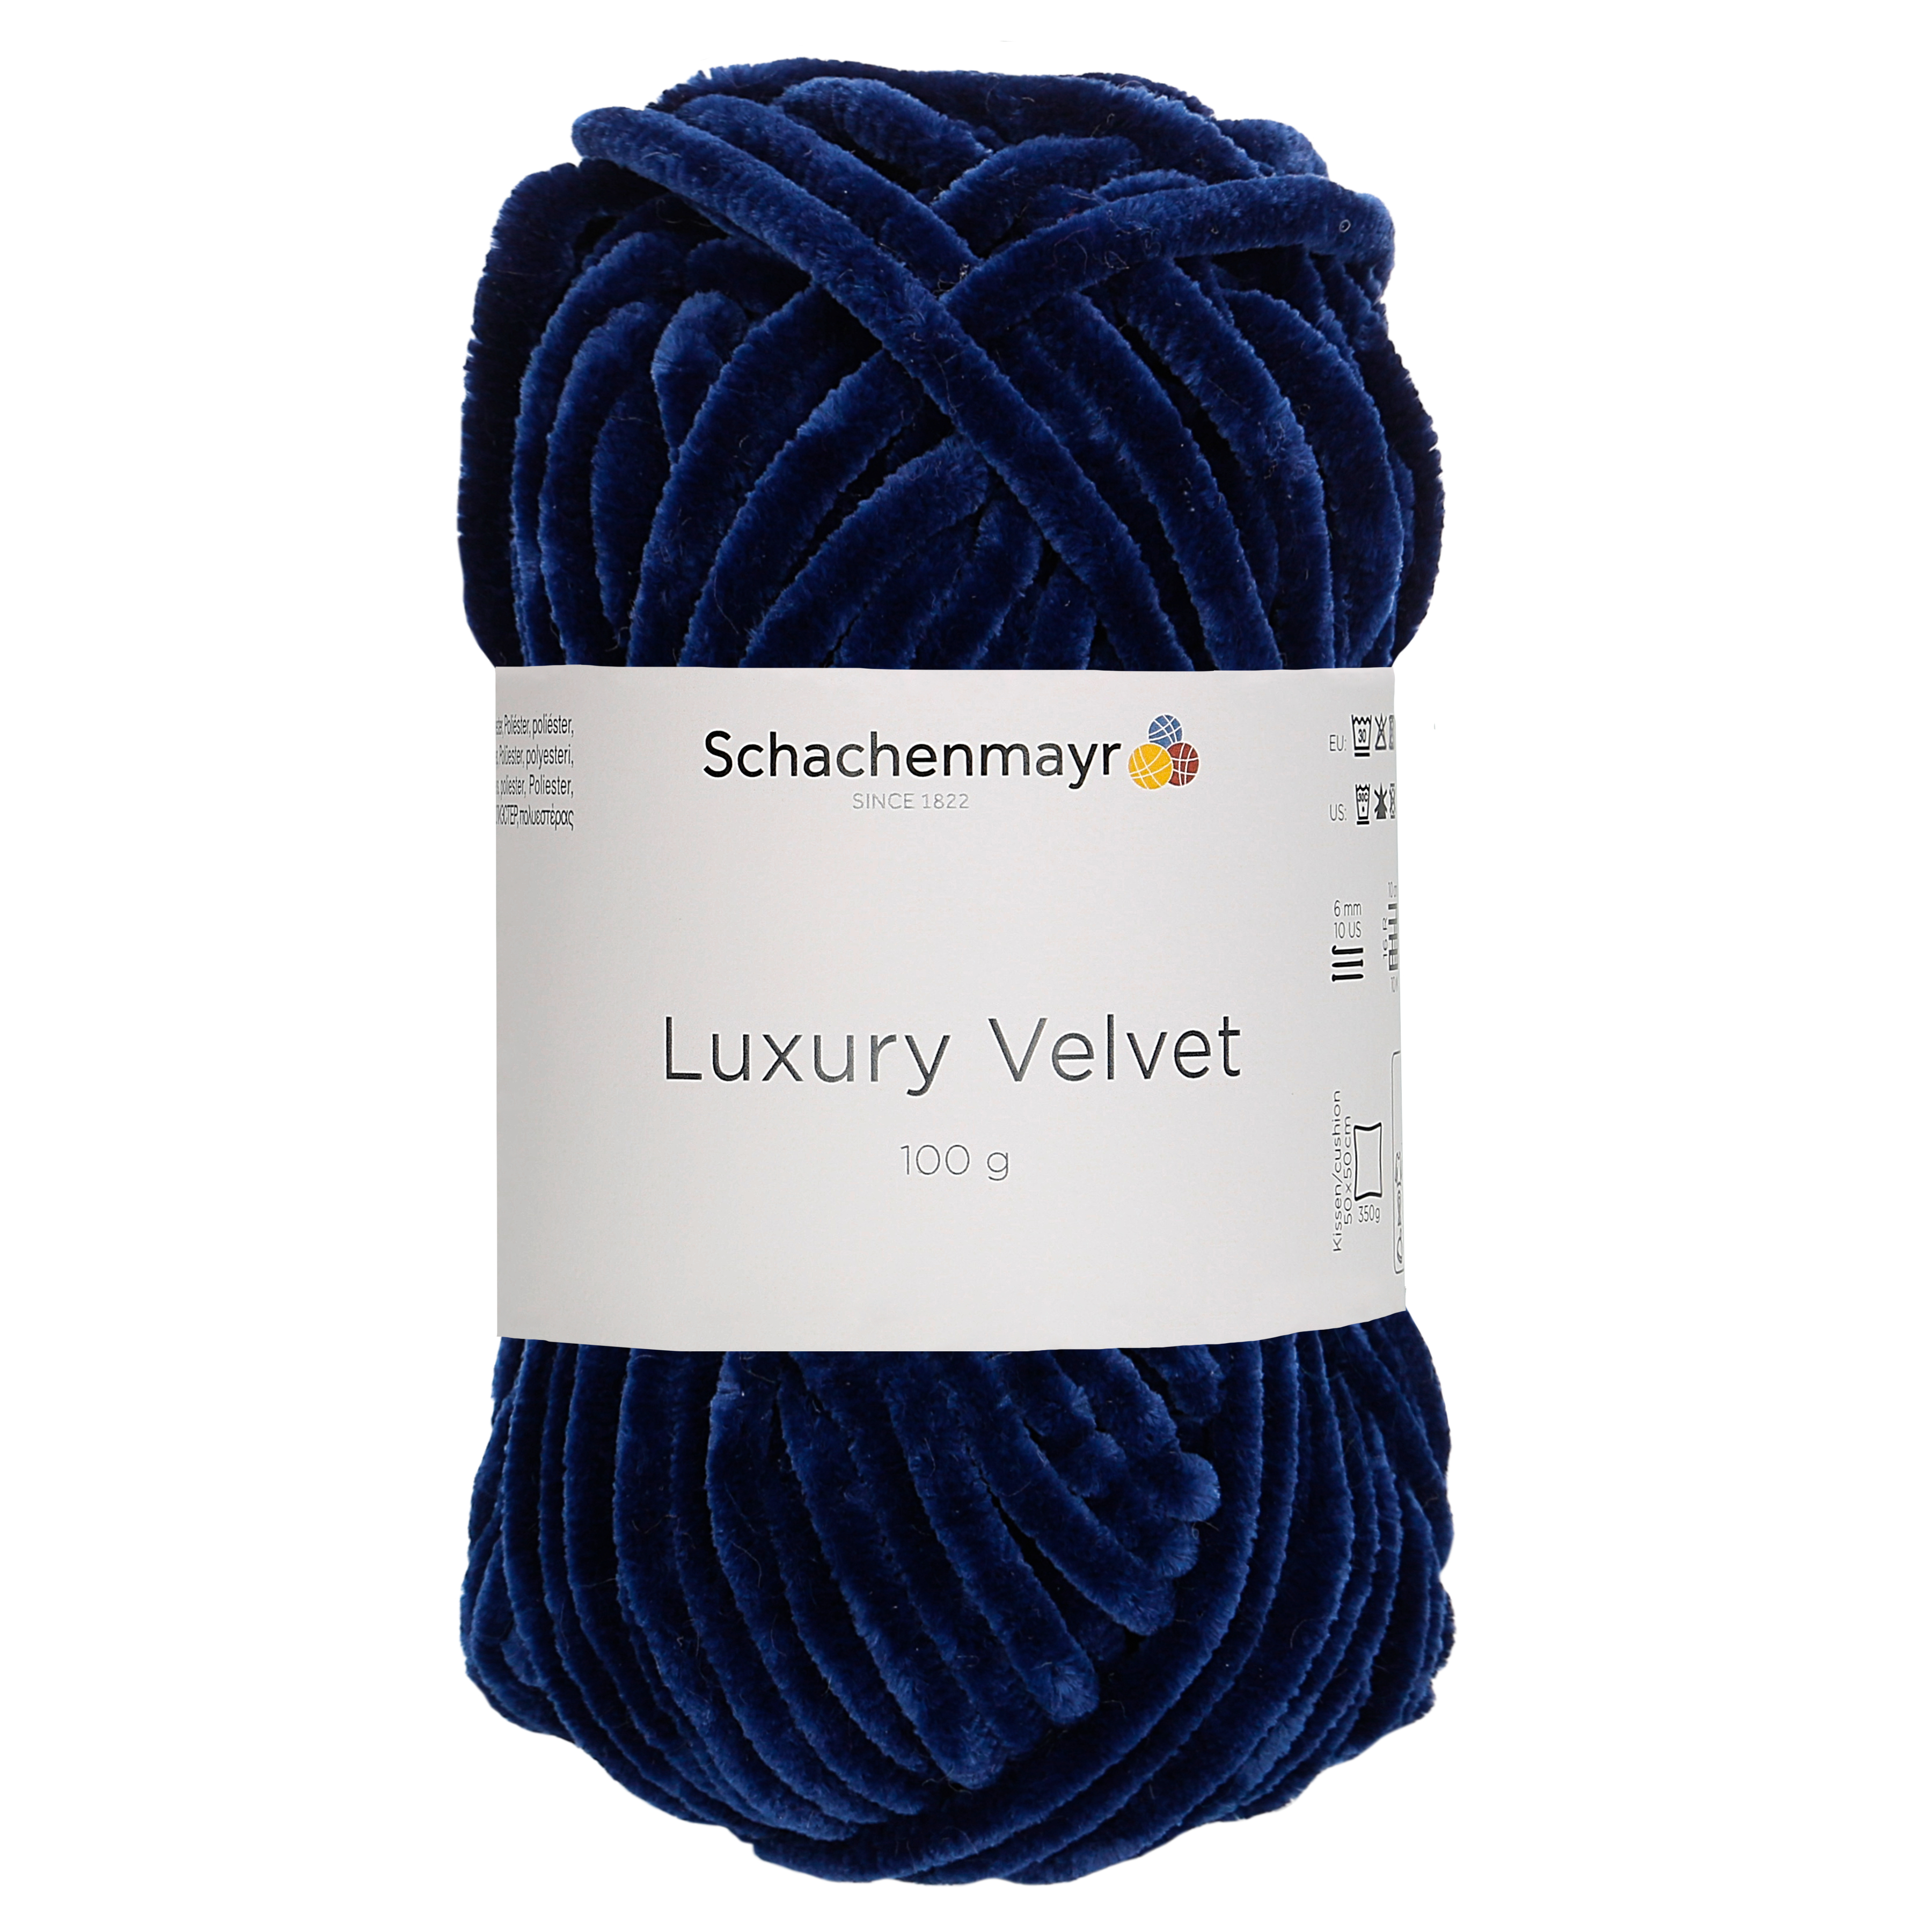 Luxury Velvet  navy kék zsenilia fonal 00050